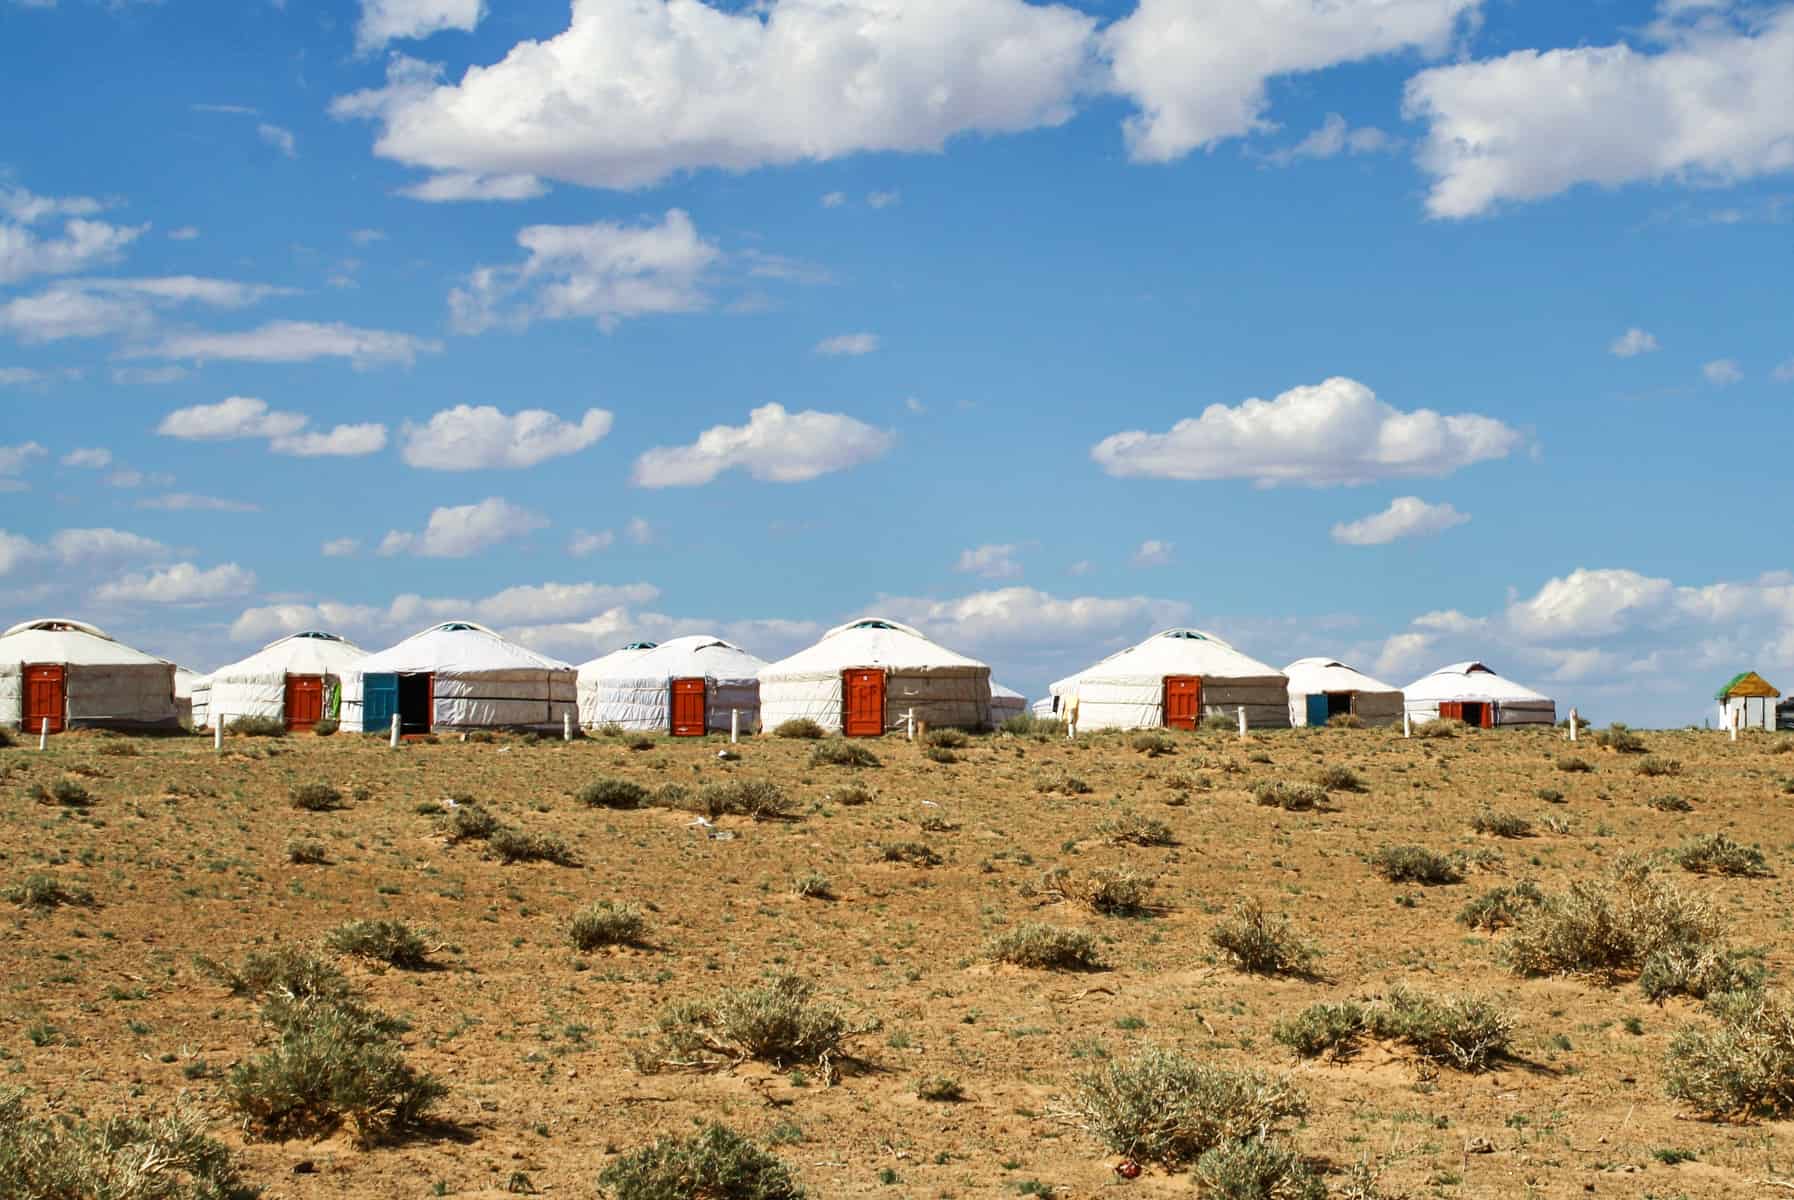 A dozen white gers line a hilltop in the Gobi Desert Mongolia